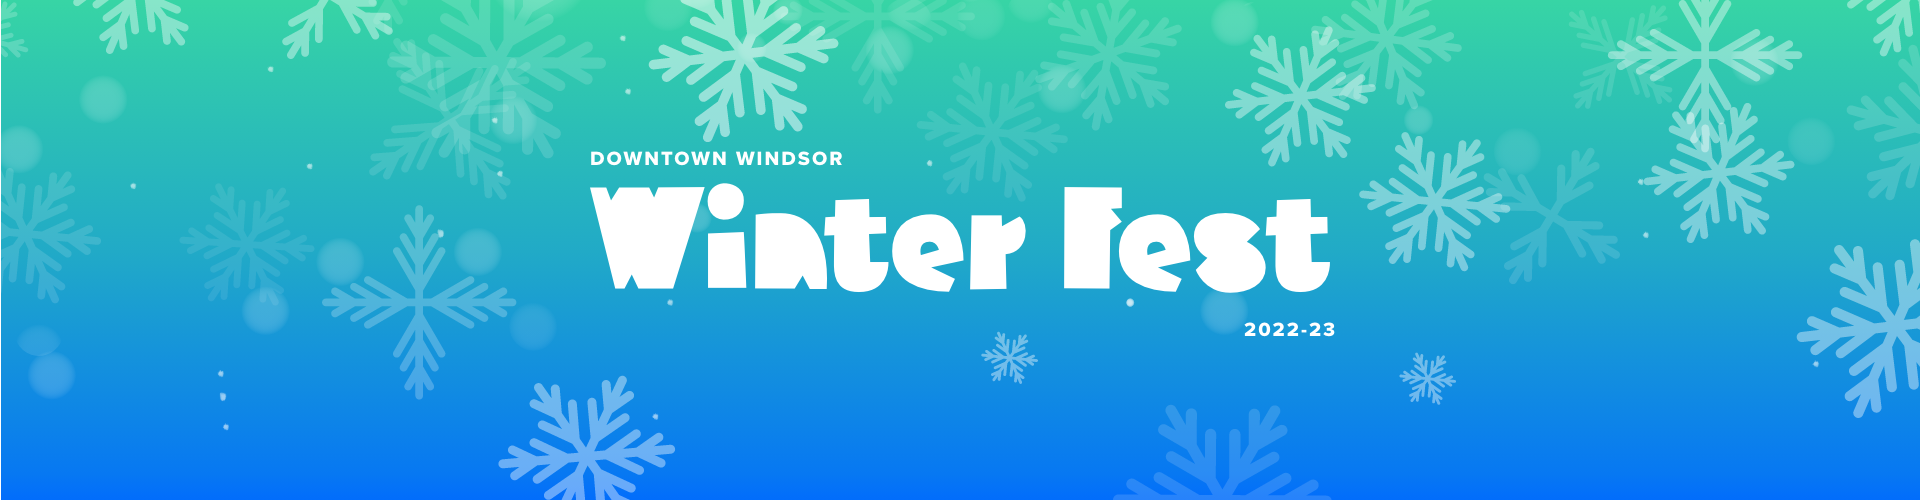 Downtown Windsor Winter Fest 2022-23